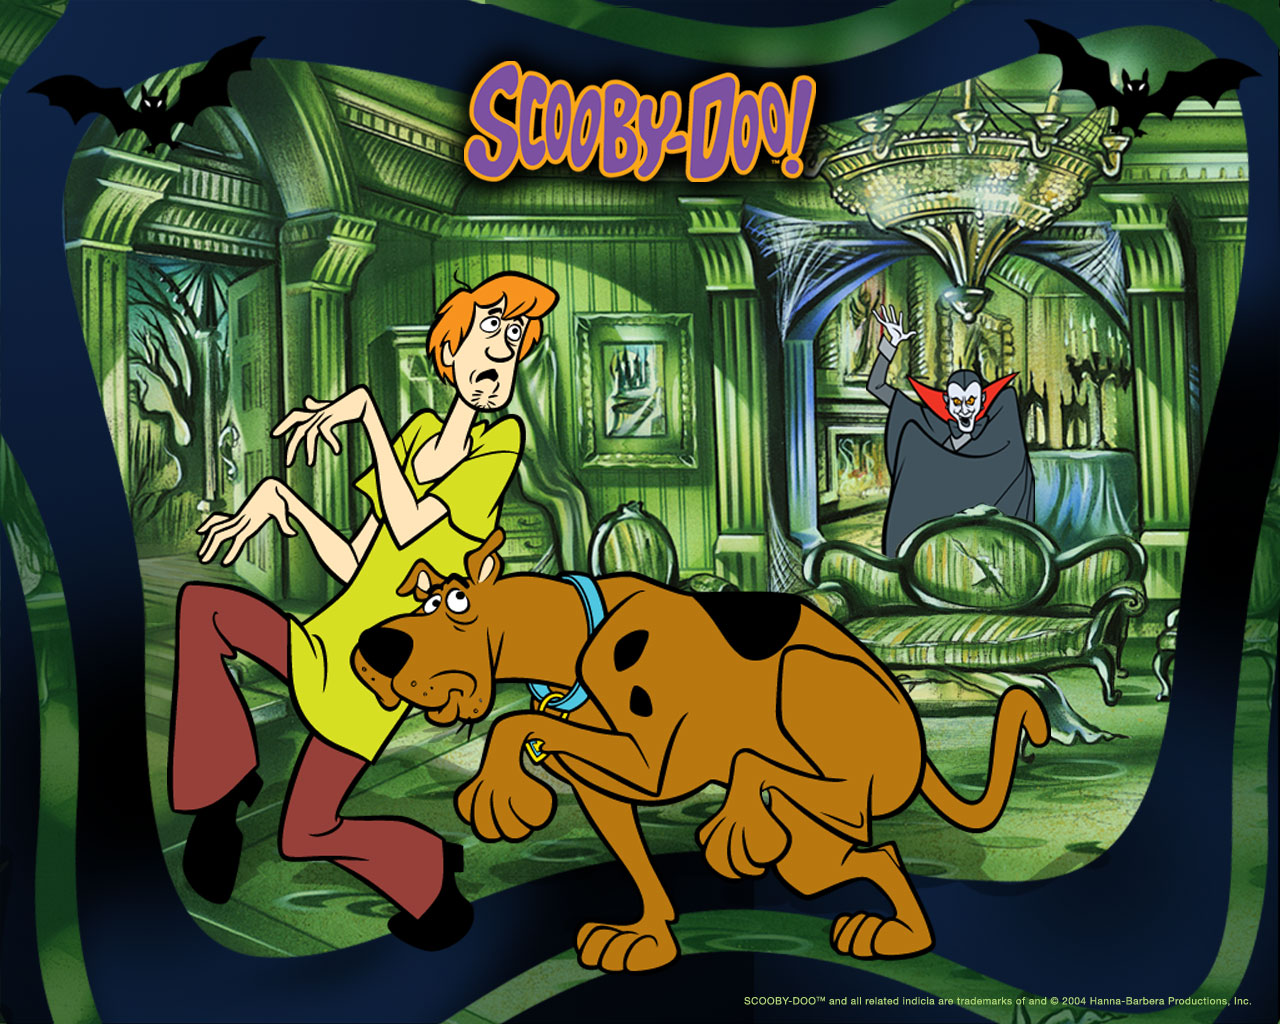 Scooby Doo Halloween Image Femalecelebrity